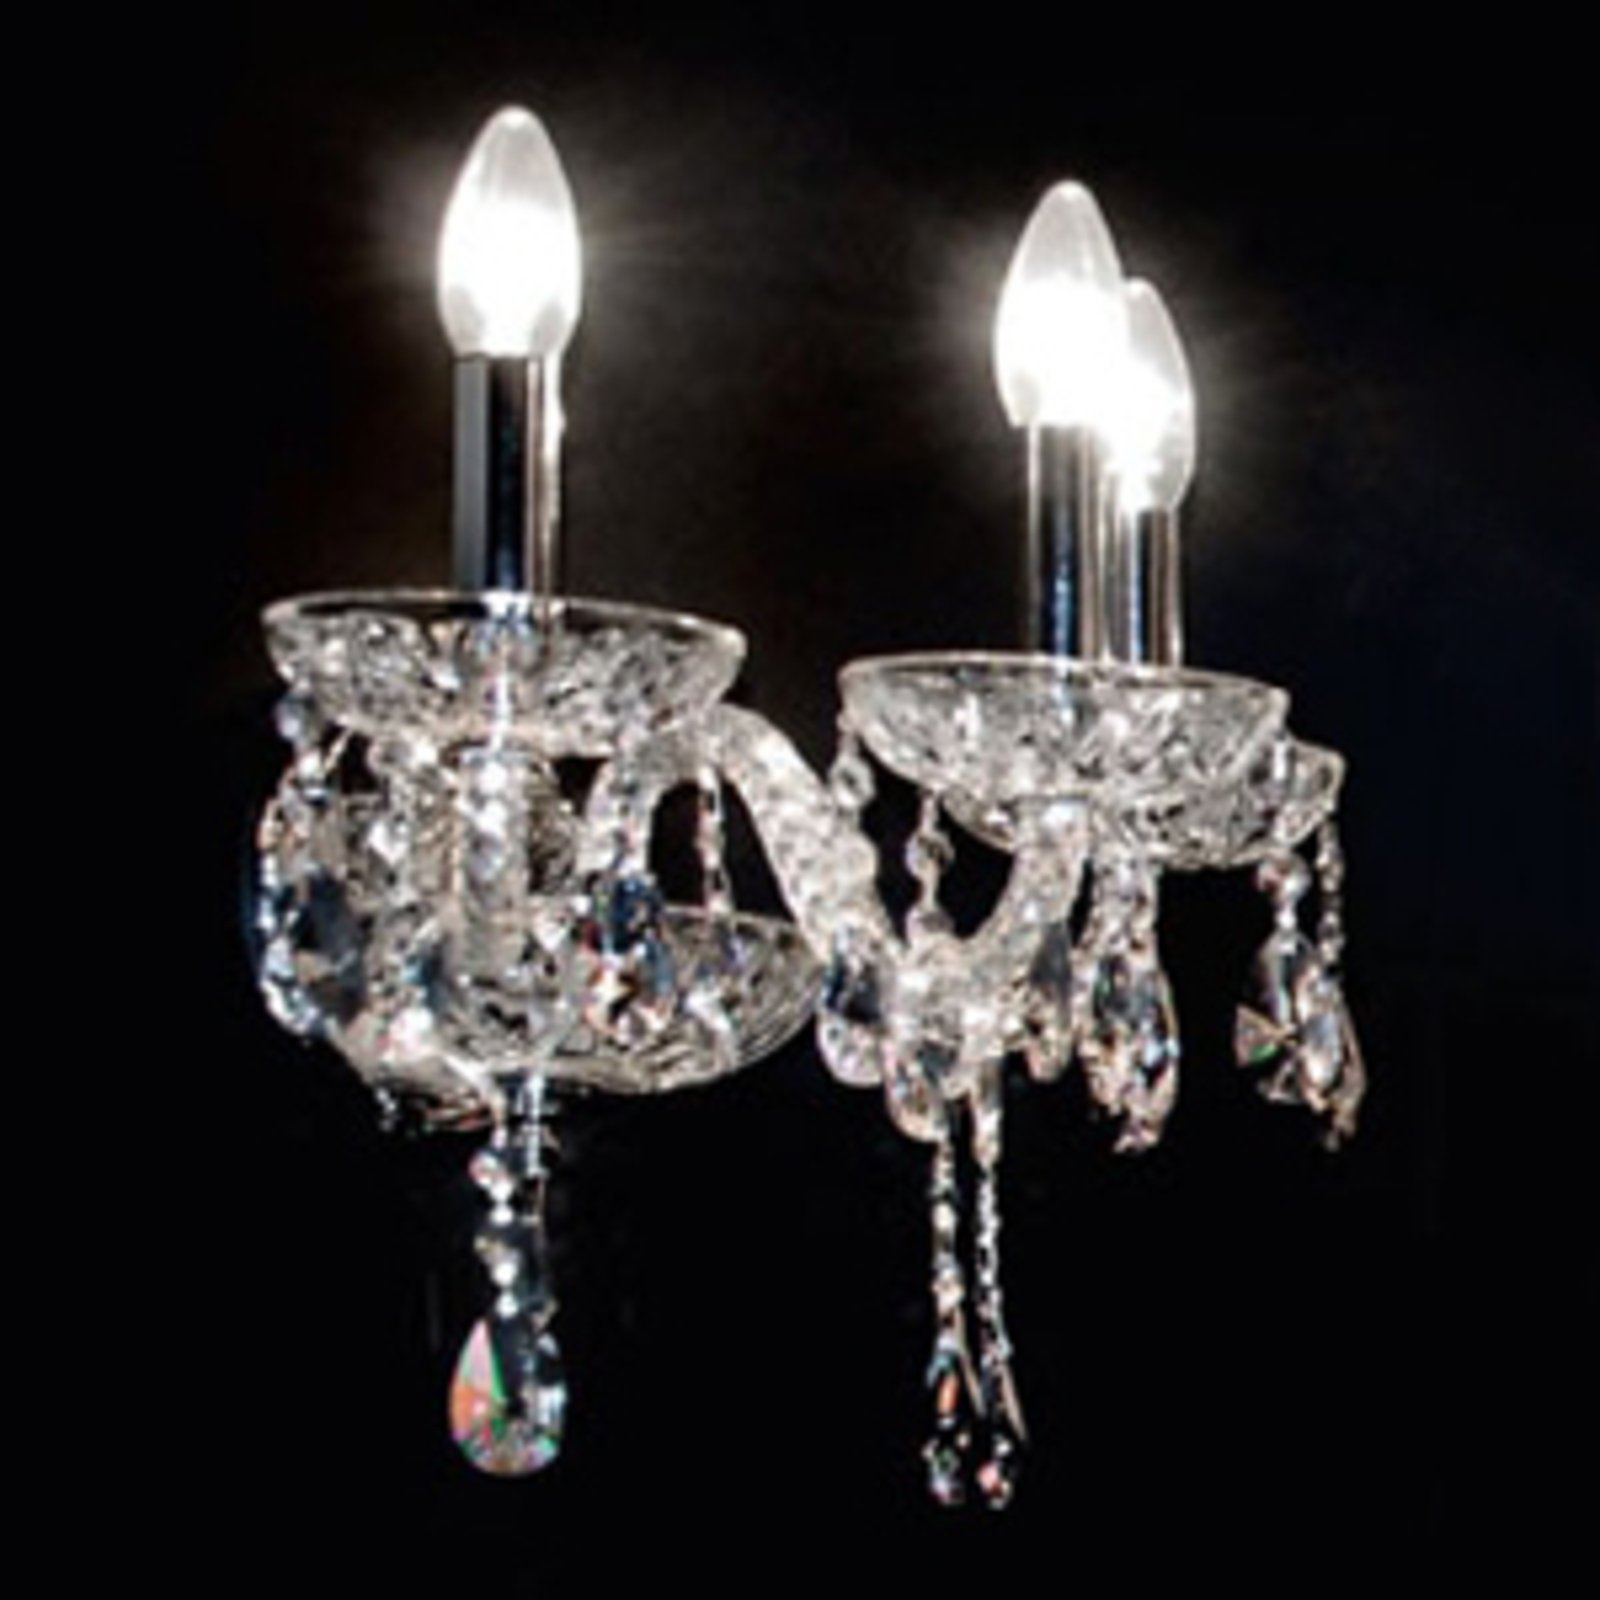 Wandlamp Oldies But Goldies kristal 3-lamps